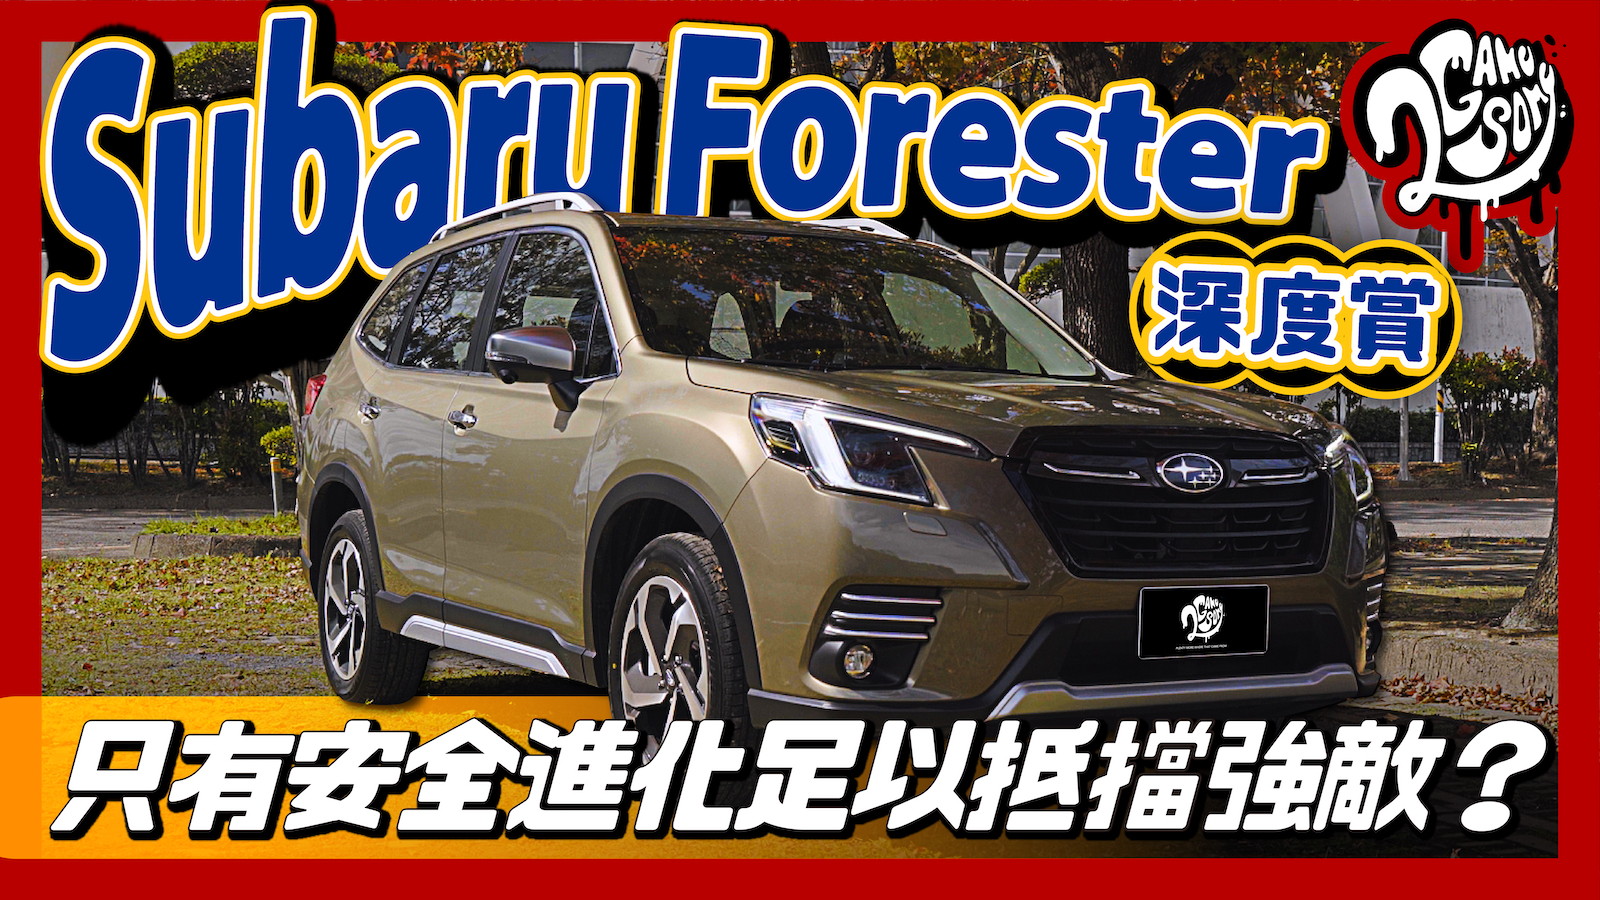 ▲ Subaru Forester 深度賞｜只有安全進化足以抵擋強敵嗎？